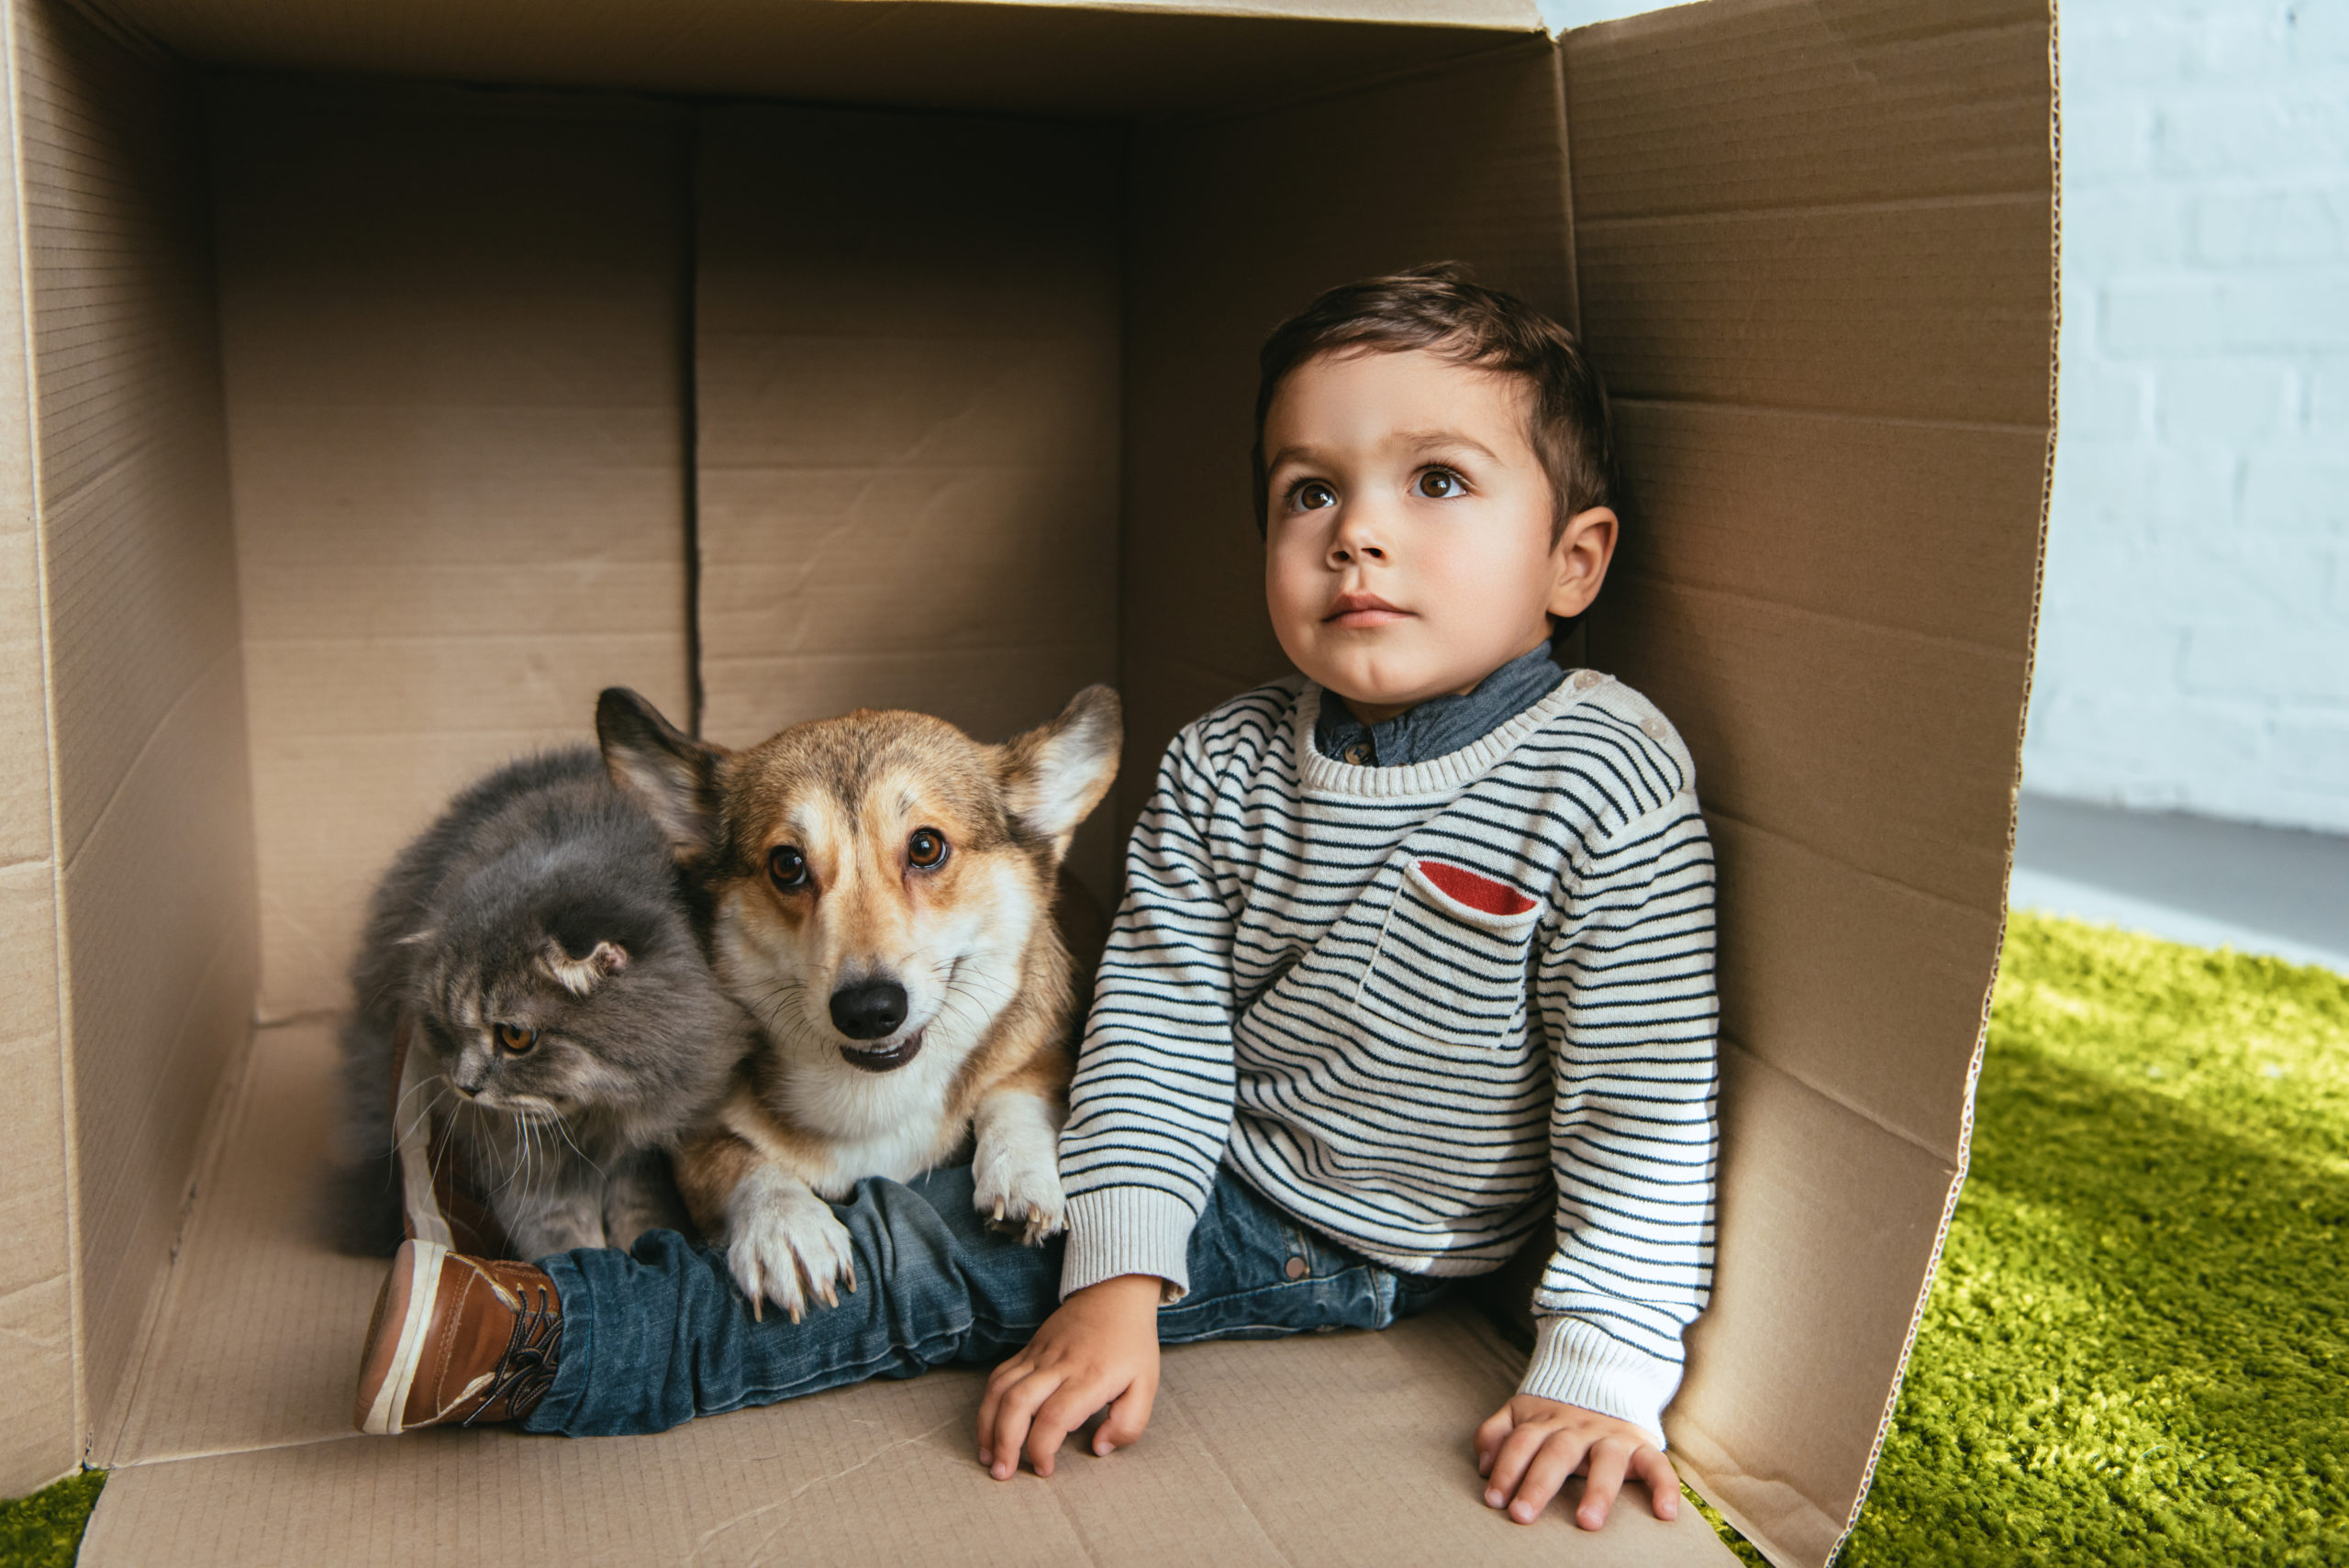 Boy and dog in a cardboard box